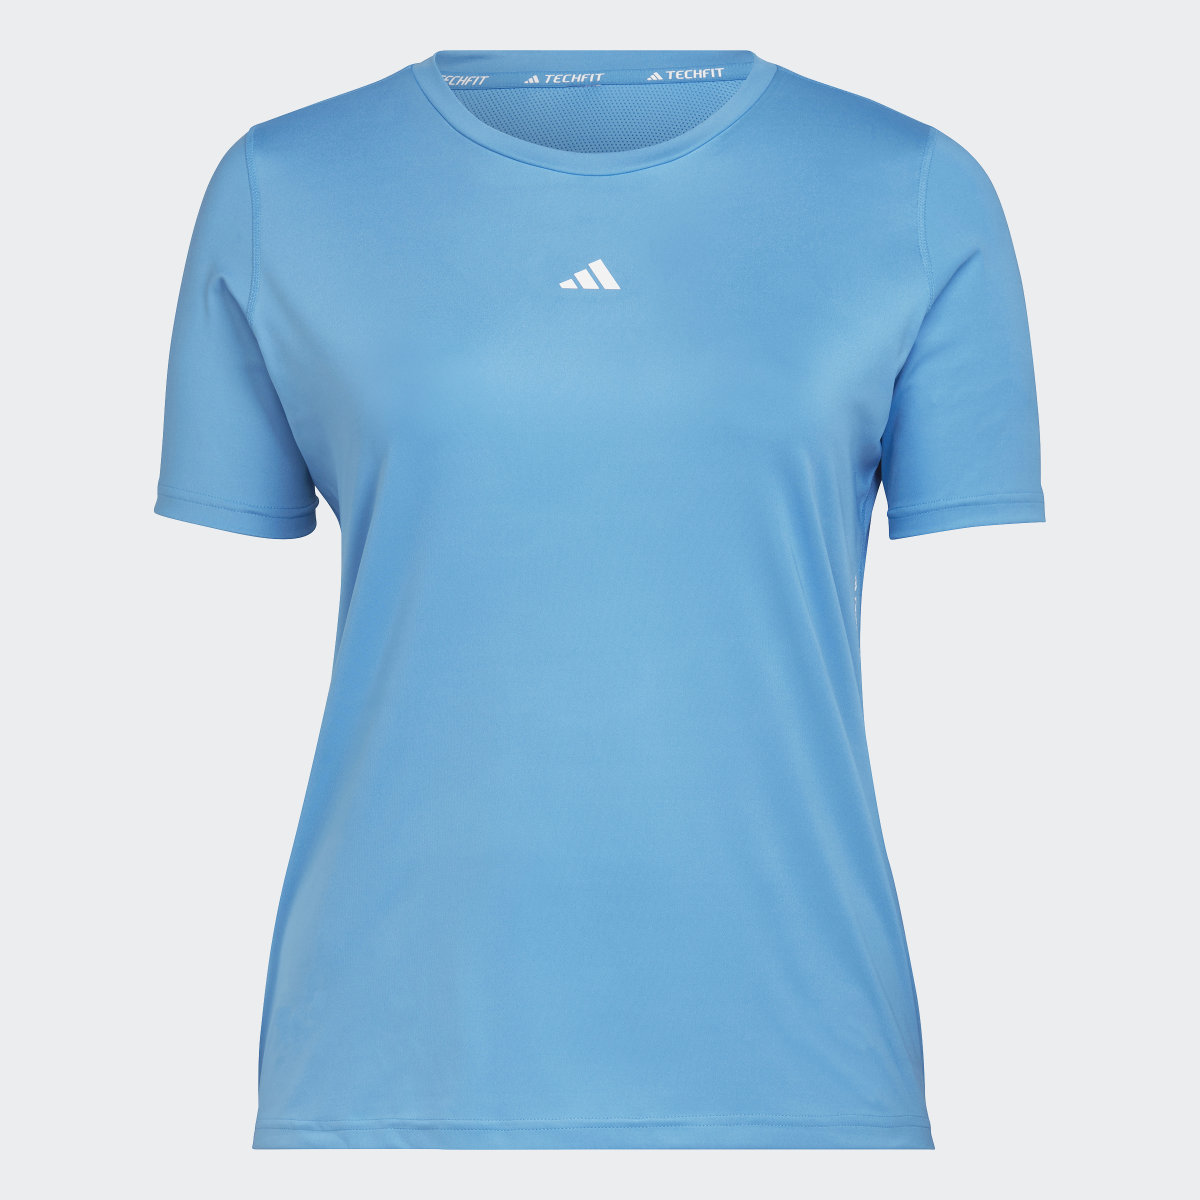 Adidas Techfit Short Sleeve Training T-Shirt (Plus Size). 6